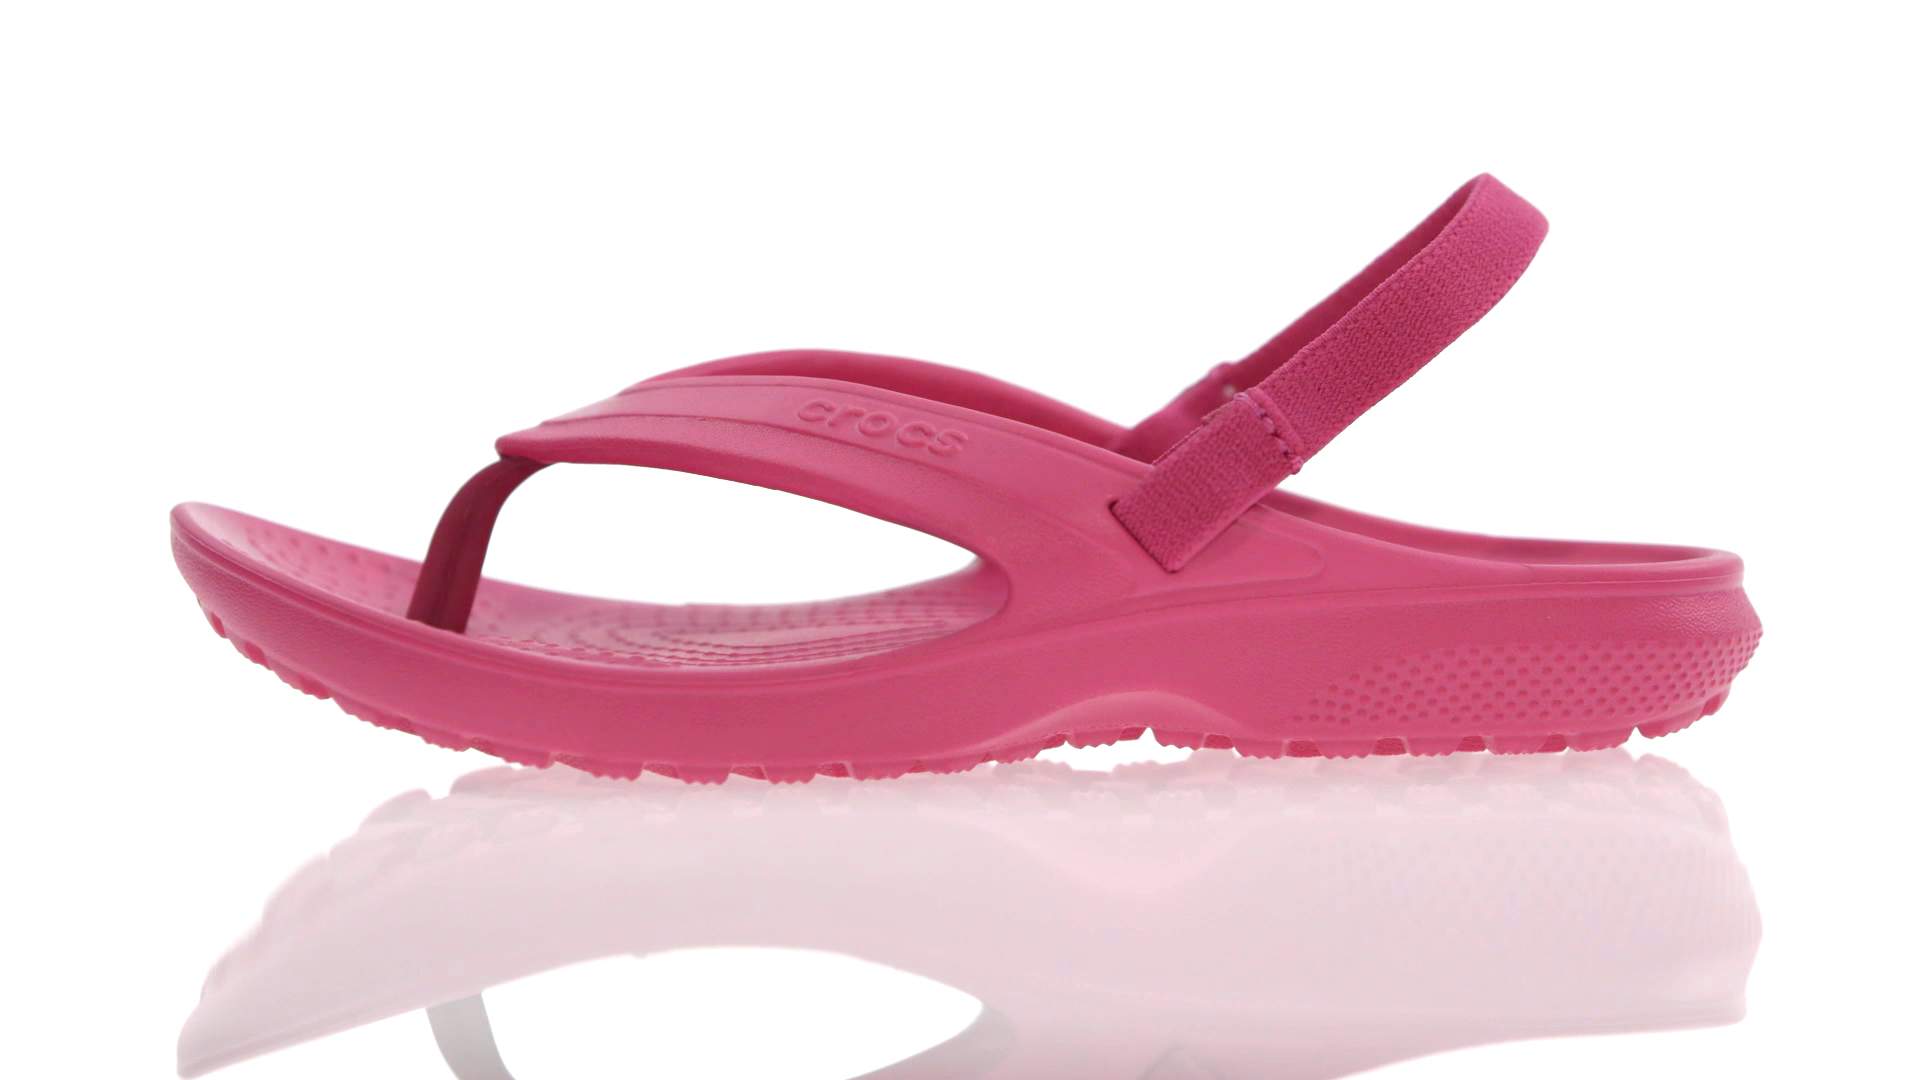 Crocs Juniors Chawaii Flip Flop Shoes US 3 Little Kid Party Pink 